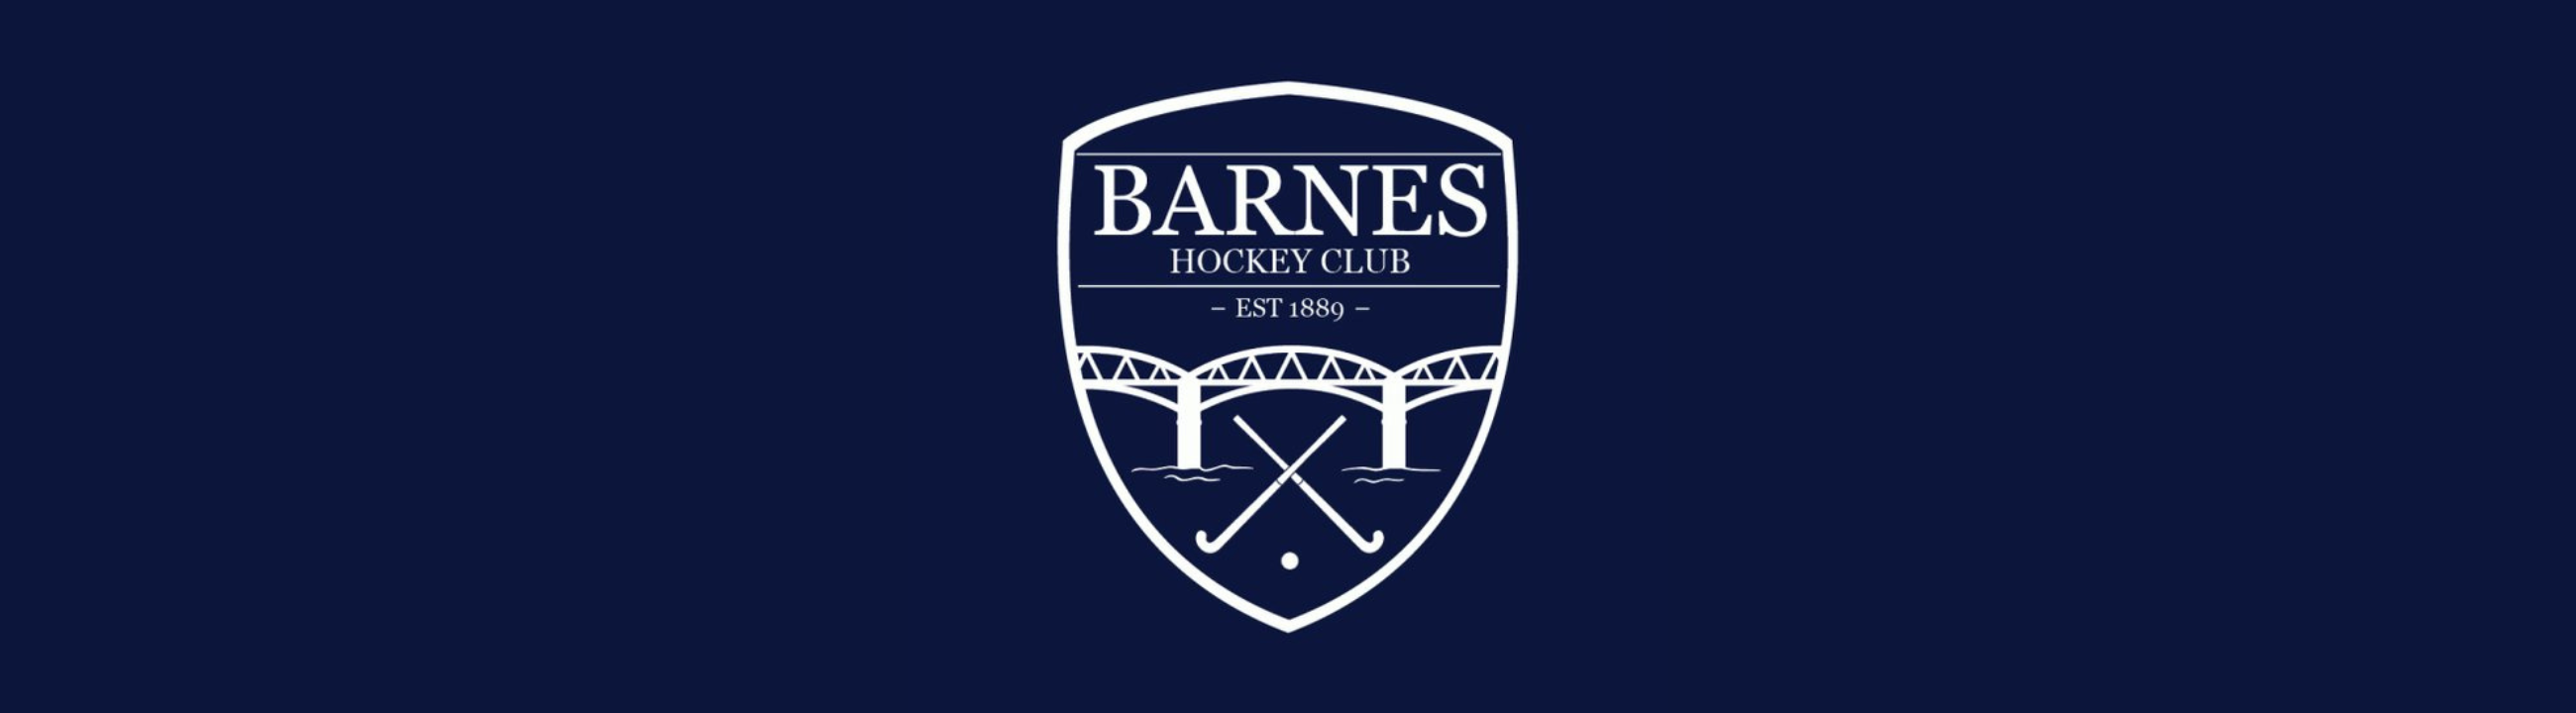 Barnes Hockey Club